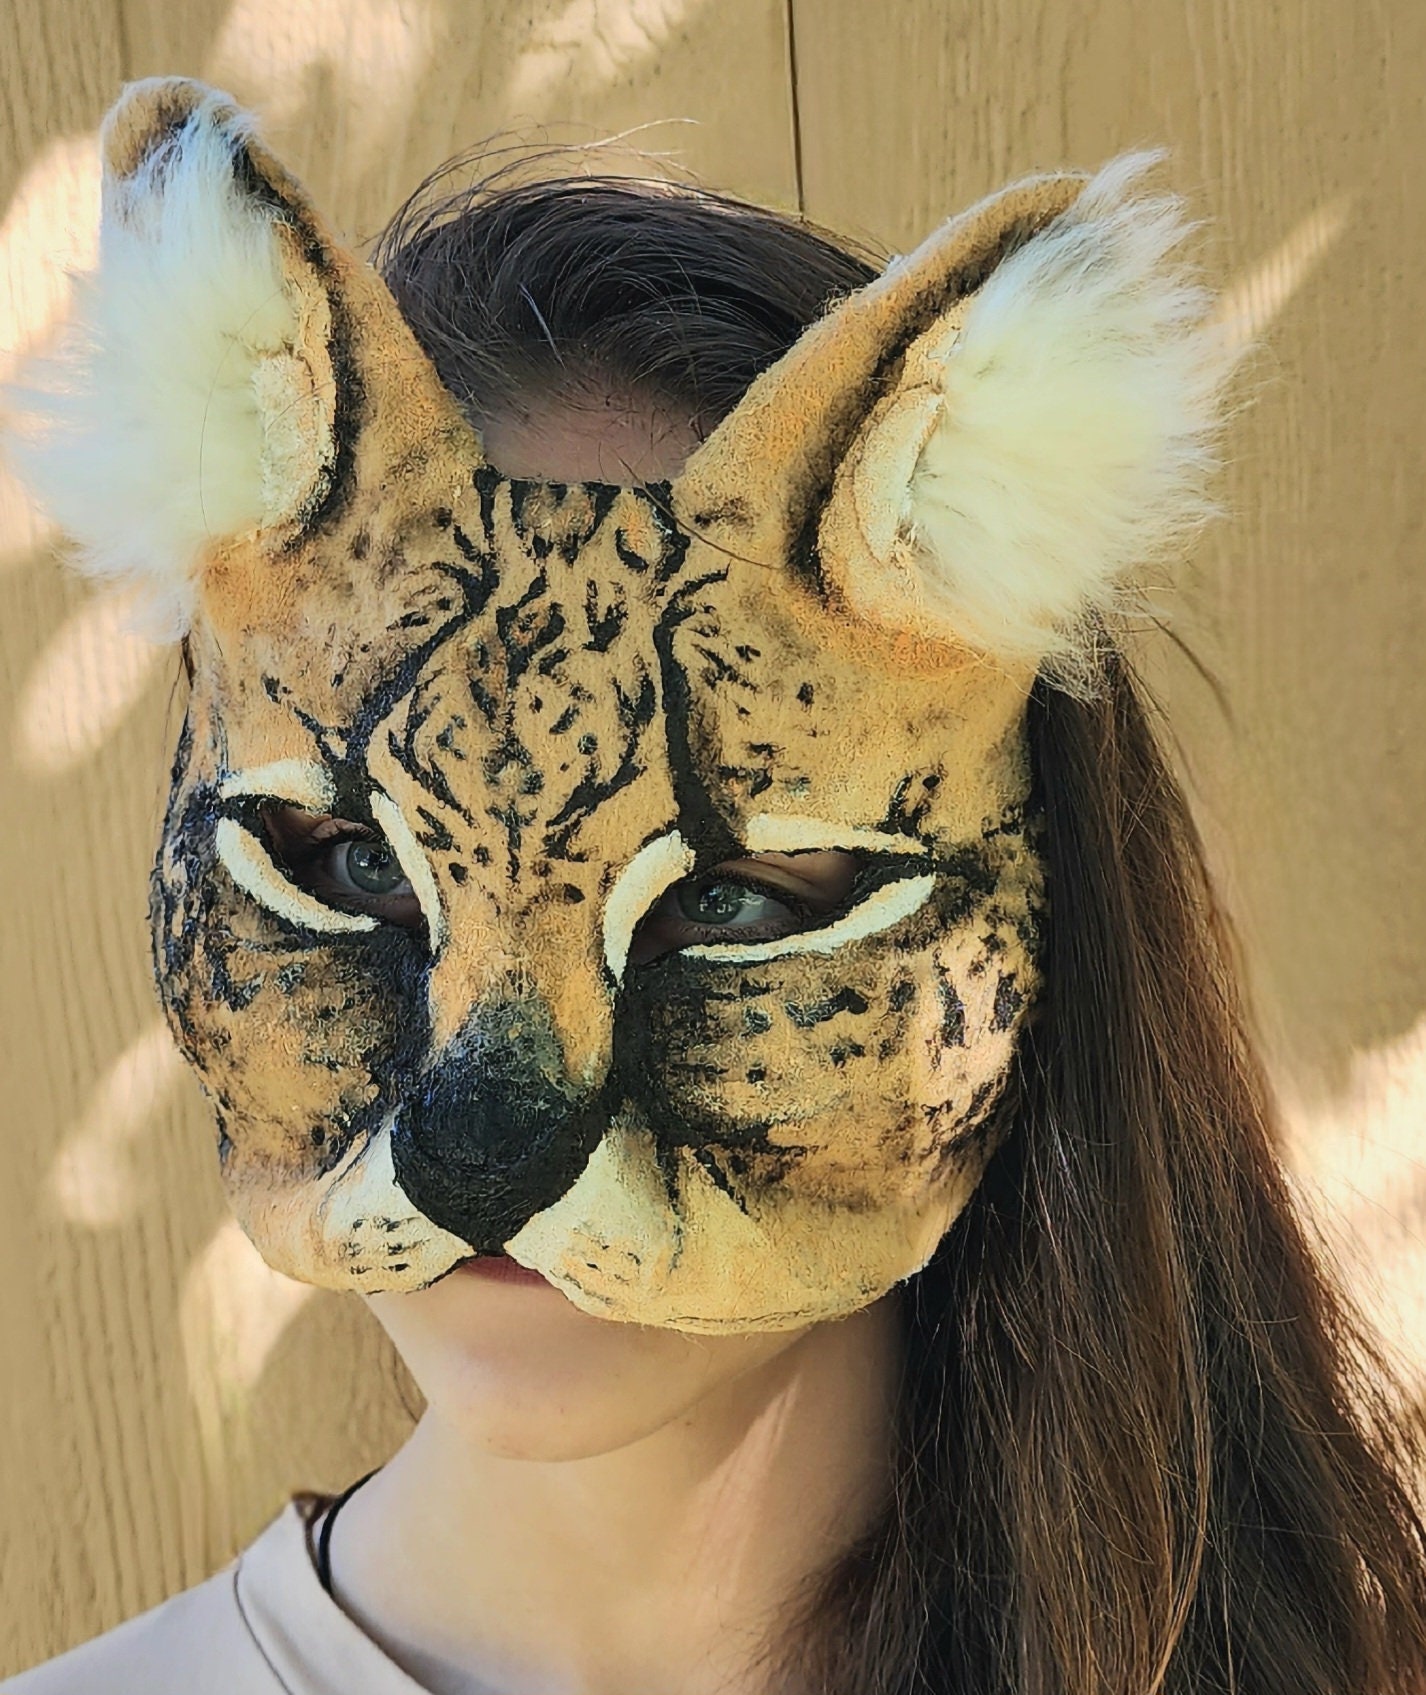 Savannah Cat, Bast, Neko, Hand Painted Mask, Serval, Cat Mask